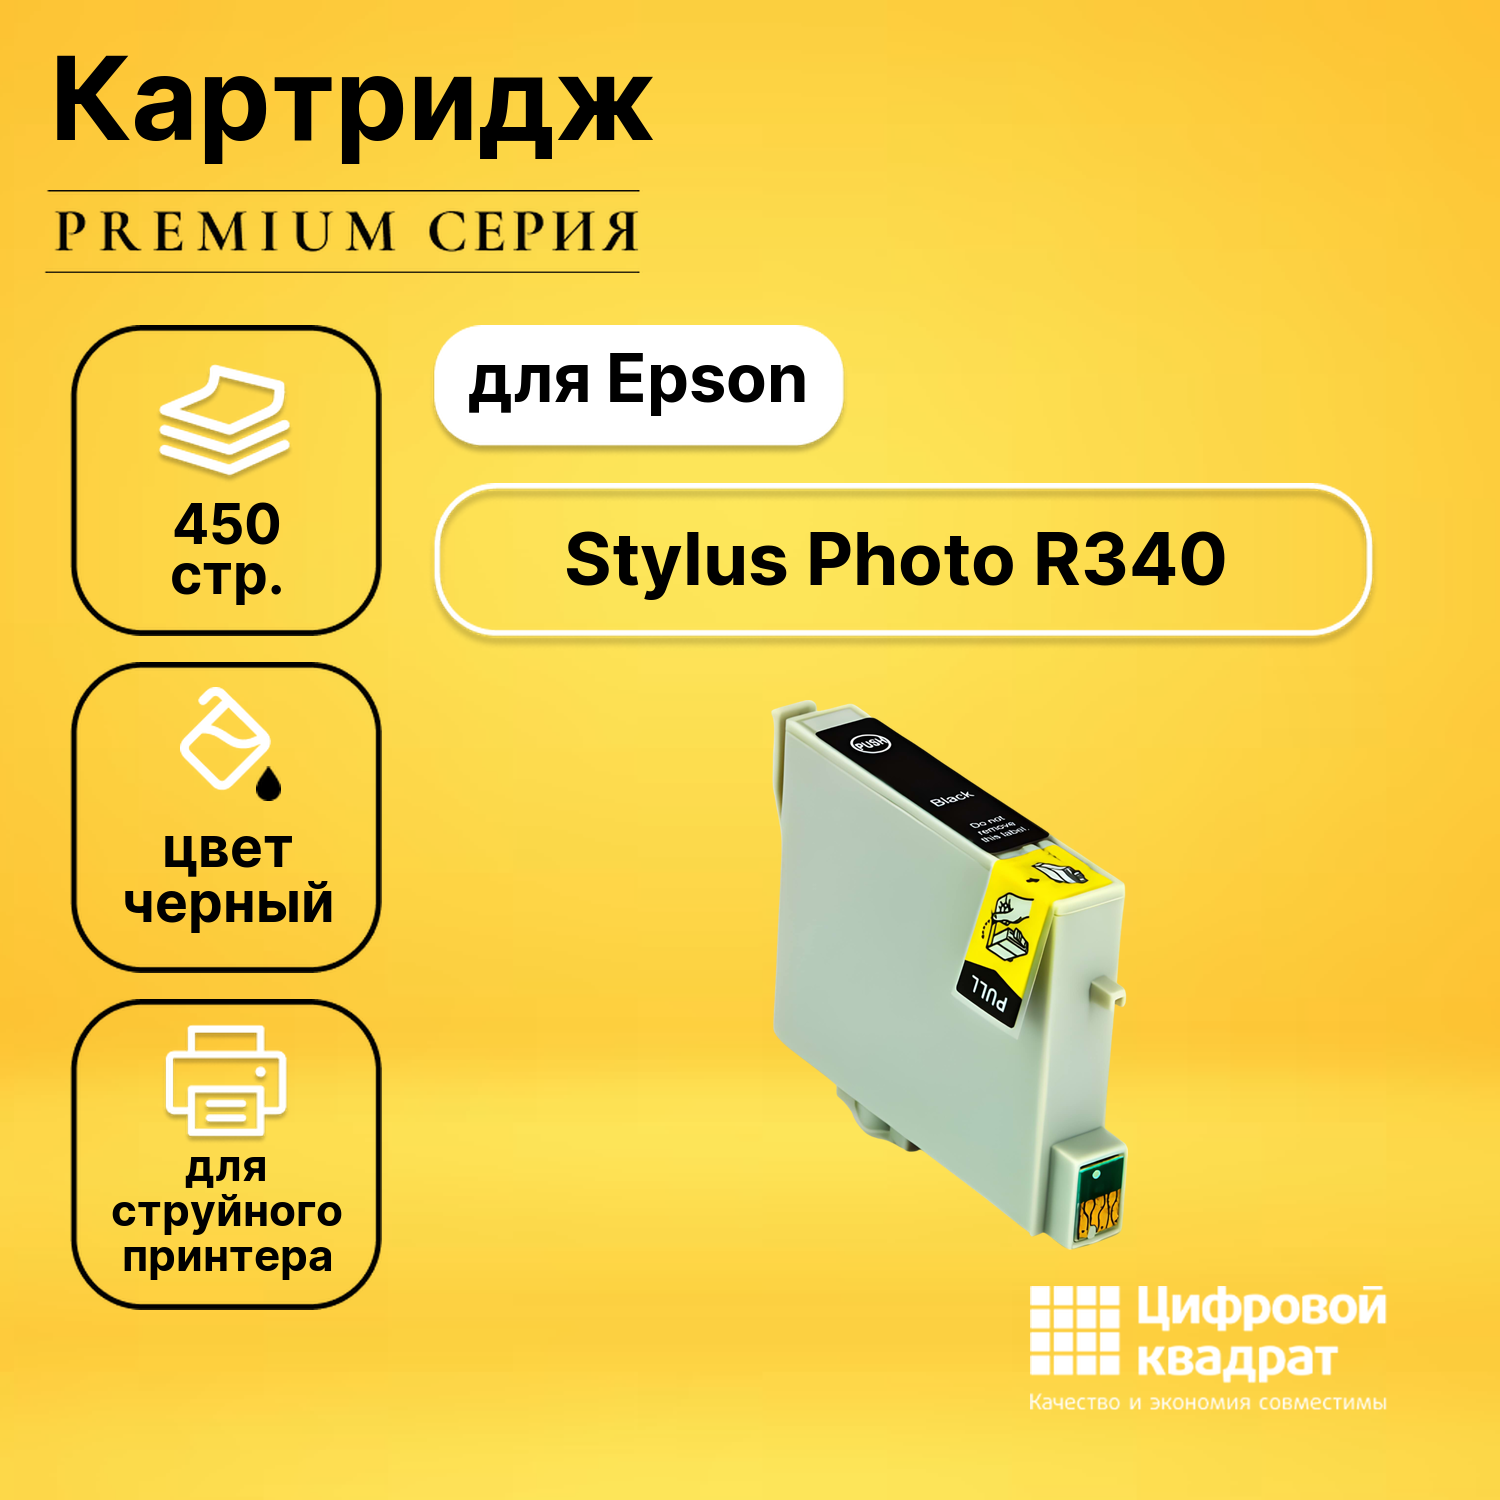 Картридж DS для Epson Stylus Photo R340 совместимый